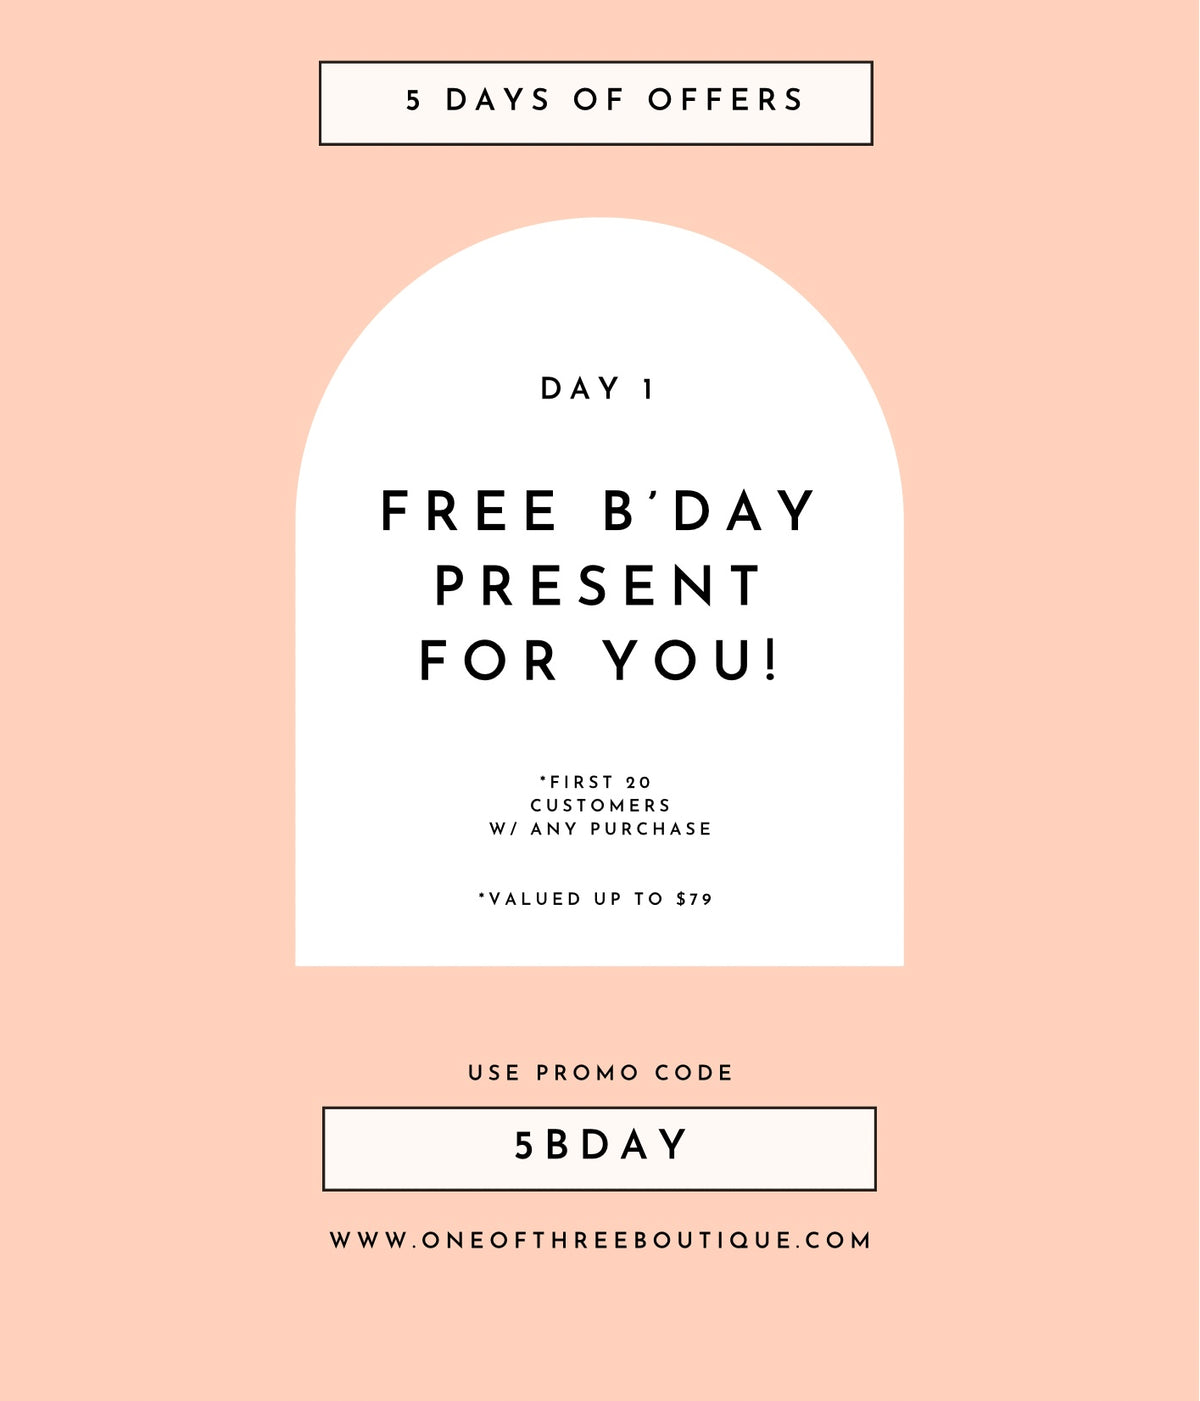 FREE B’DAY PRESENT